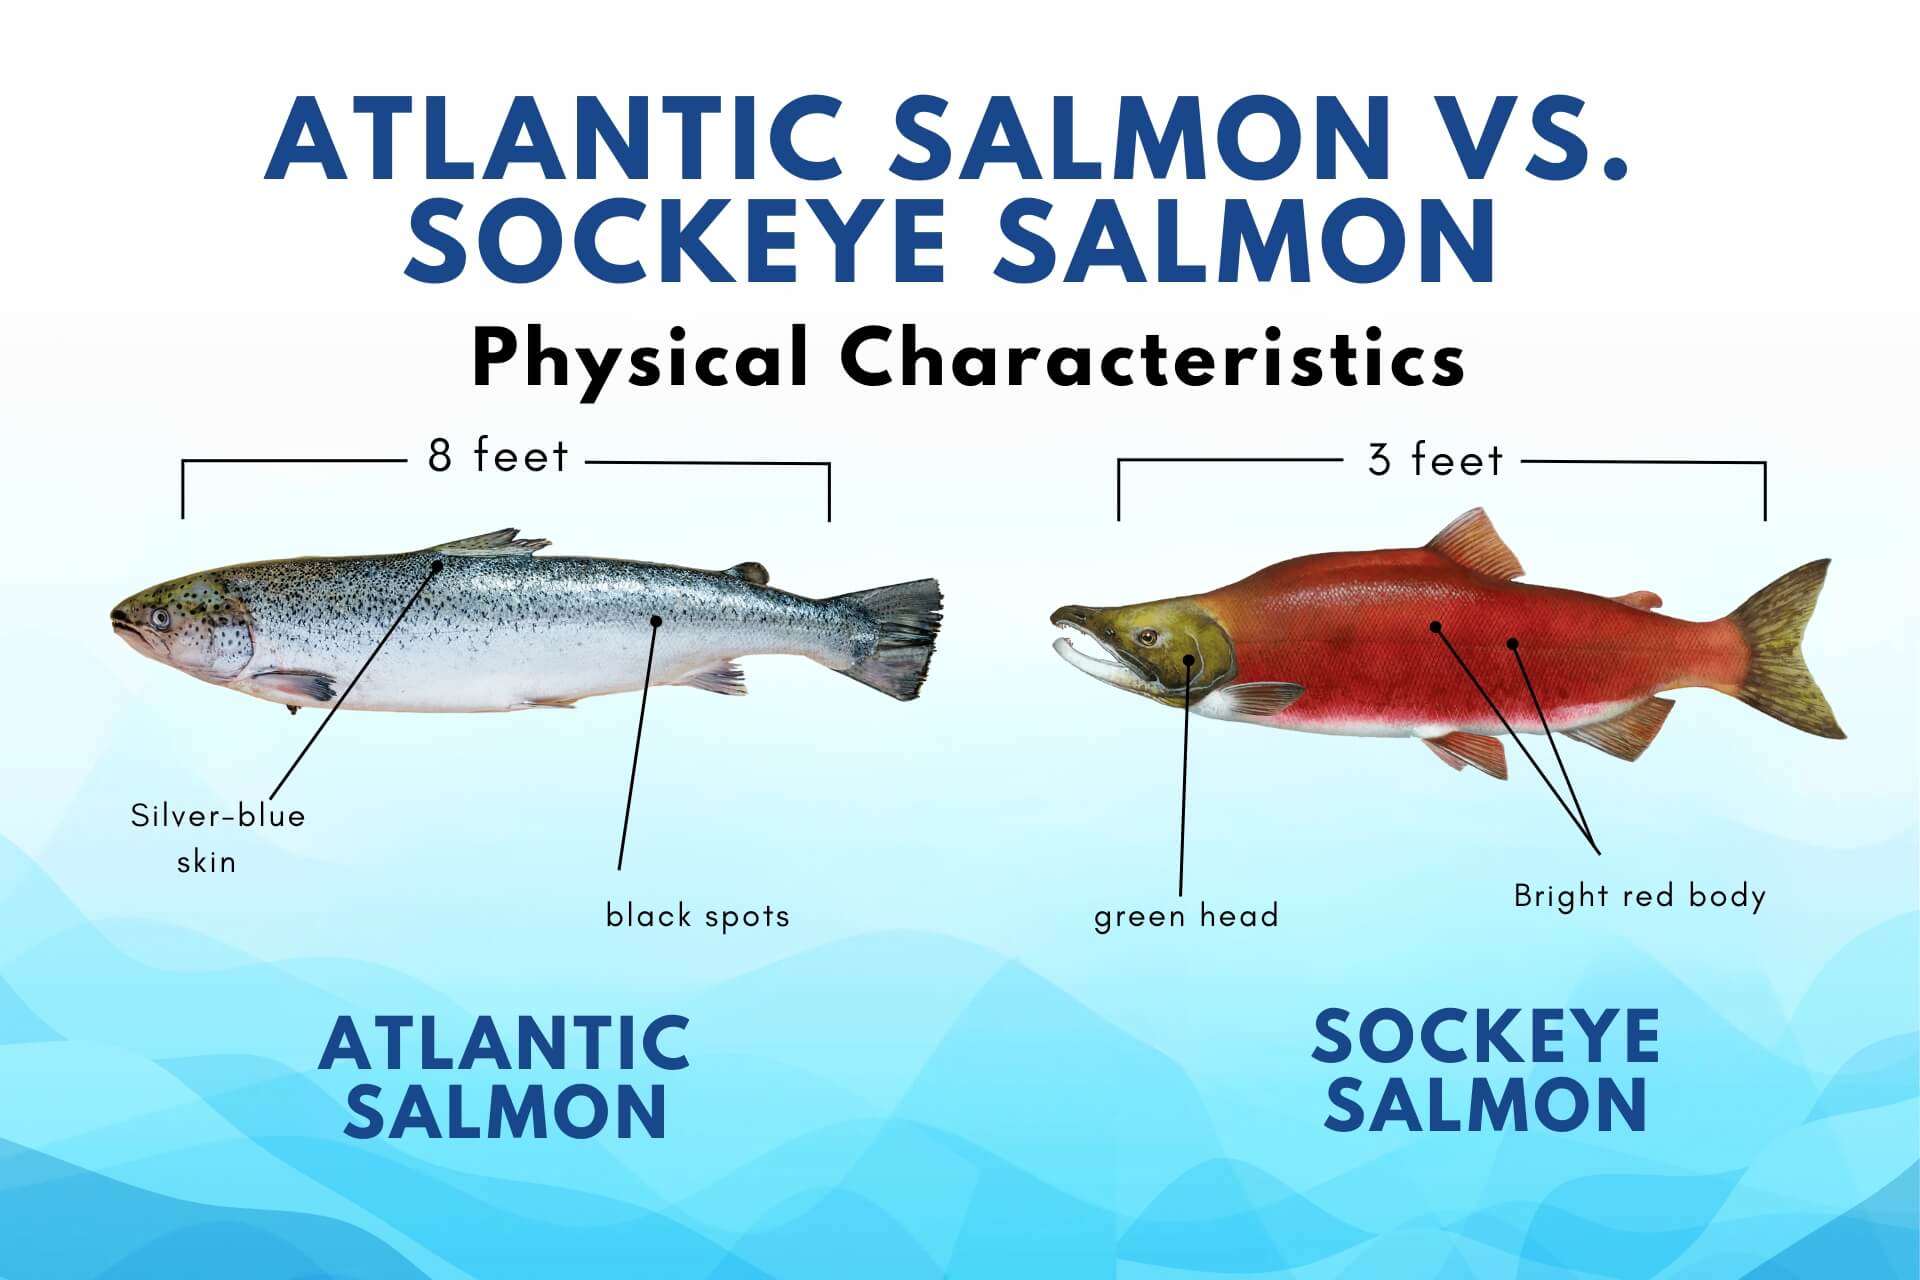 Atlantic Salmon vs. Sockeye Salmon: What's the Difference